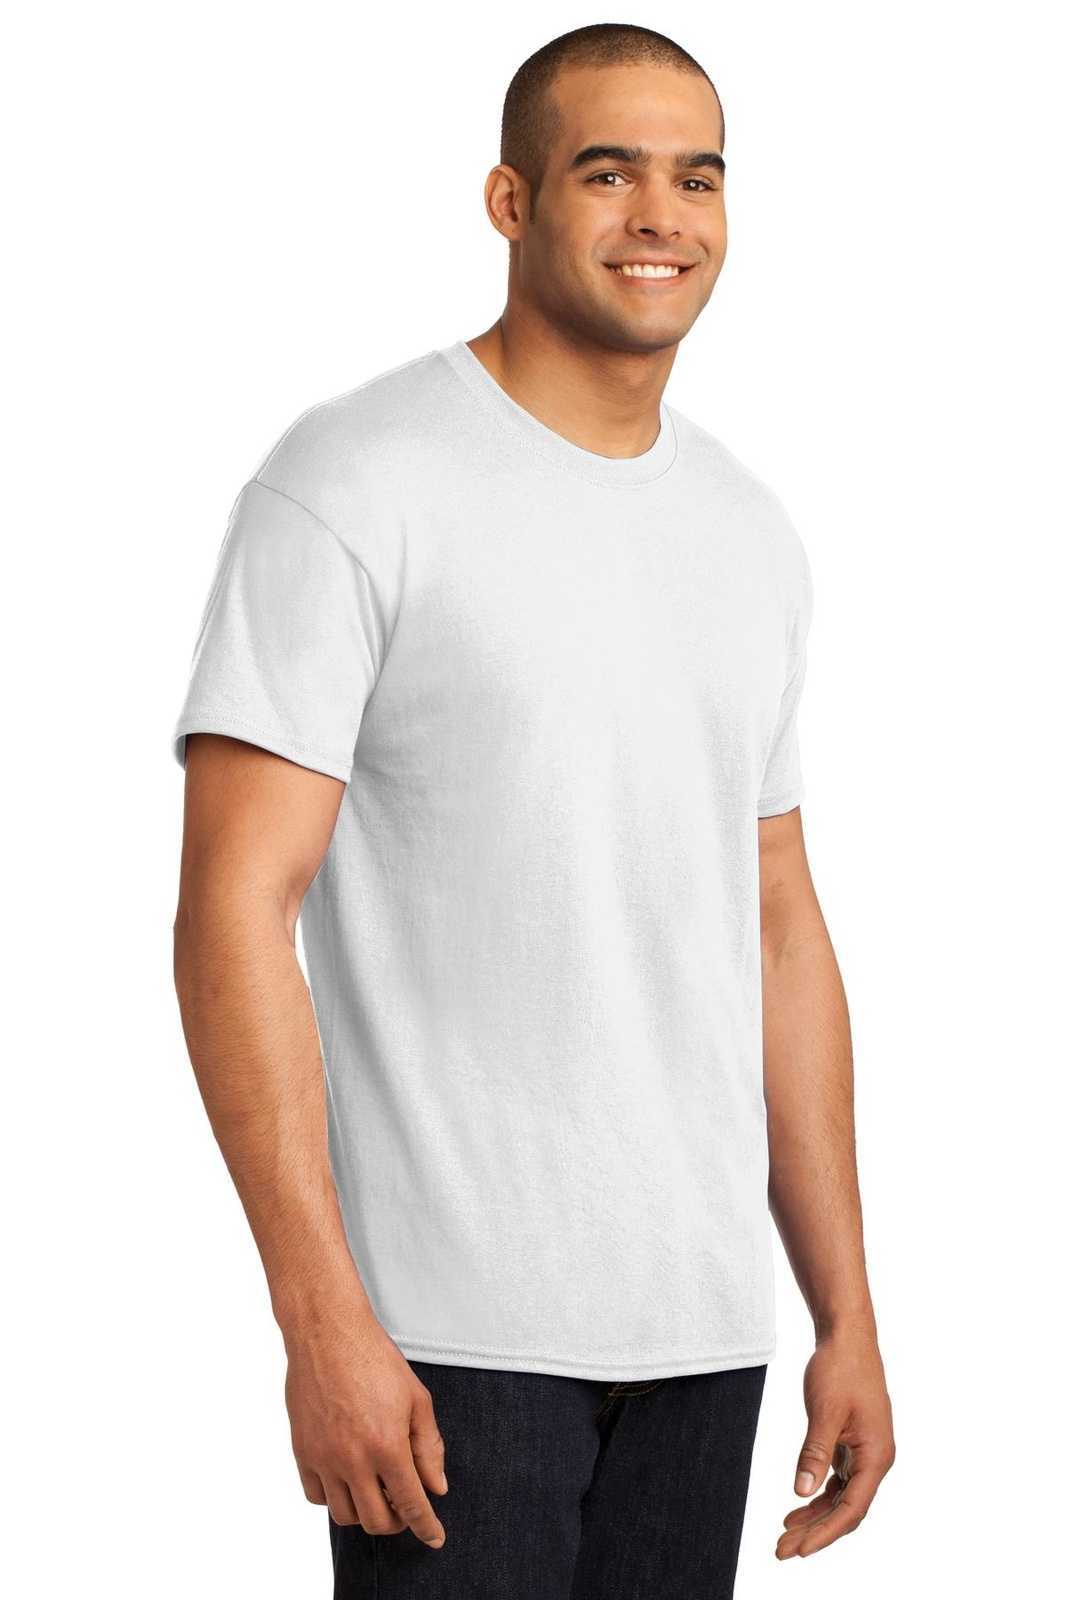 Hanes 5170 Ecosmart 50/50 Cotton/Poly T-Shirt - White - HIT a Double